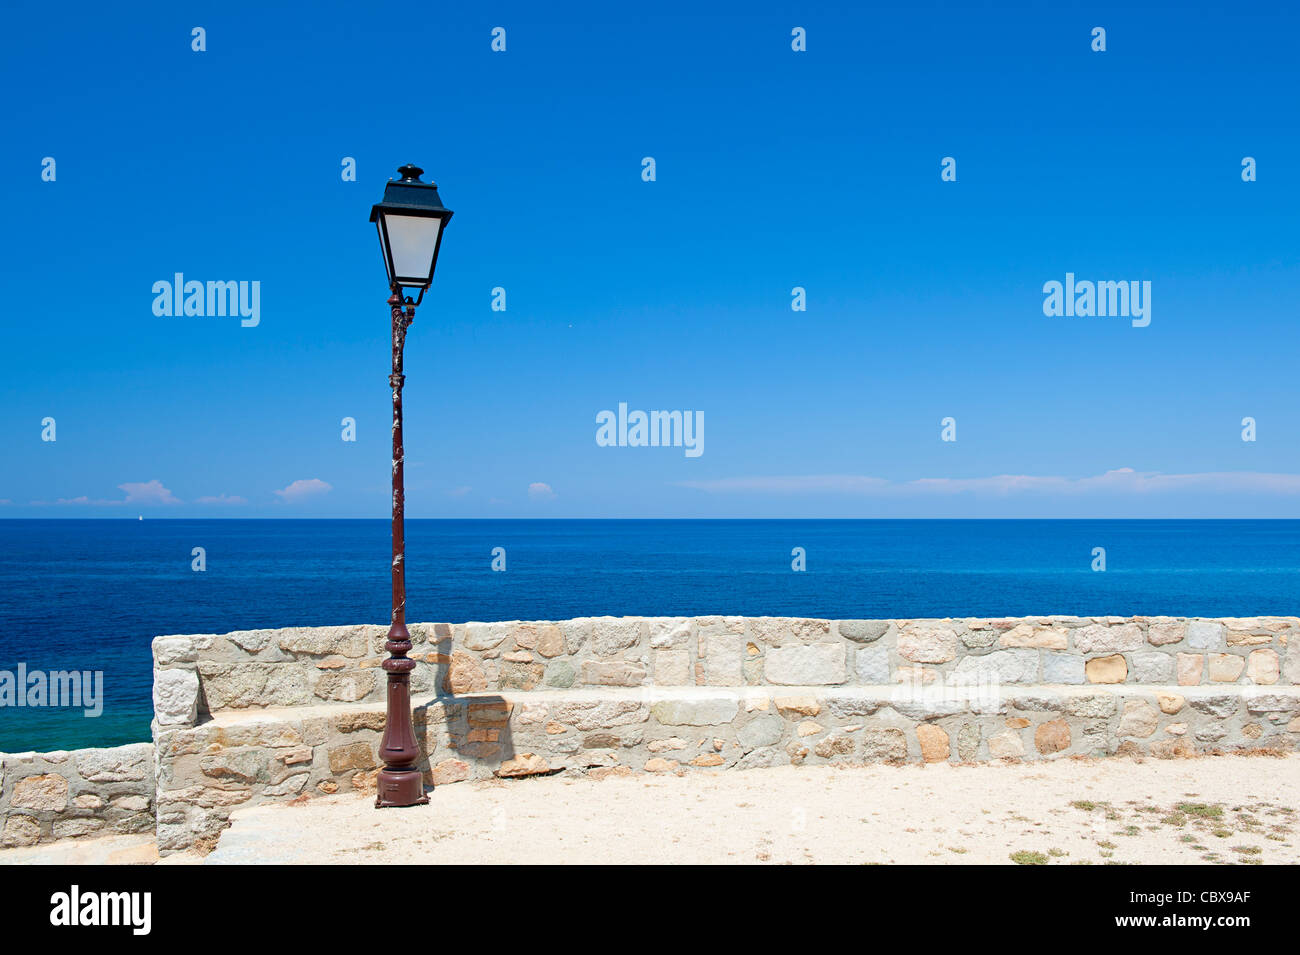 Street light by the Mediterranean Sea Stock Photo